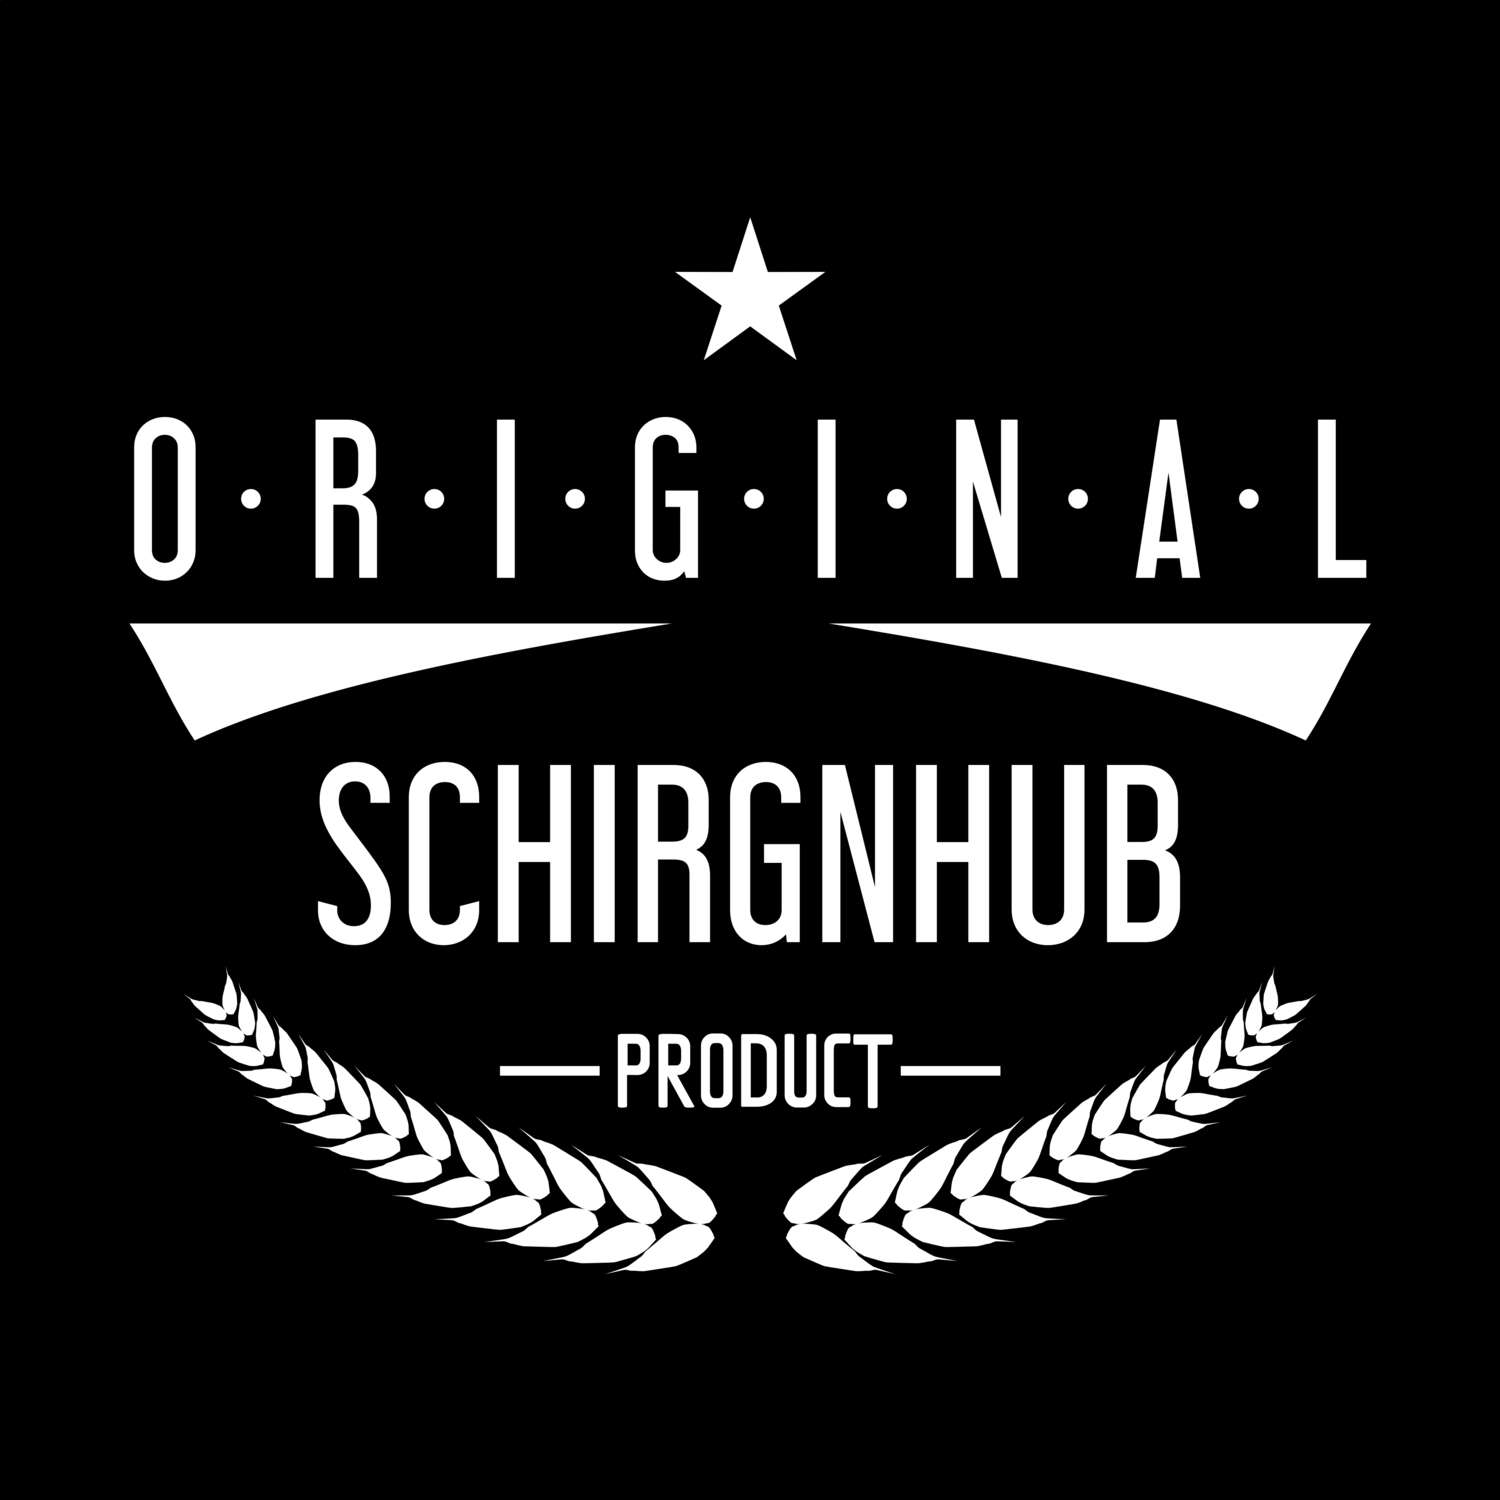 Schirgnhub T-Shirt »Original Product«